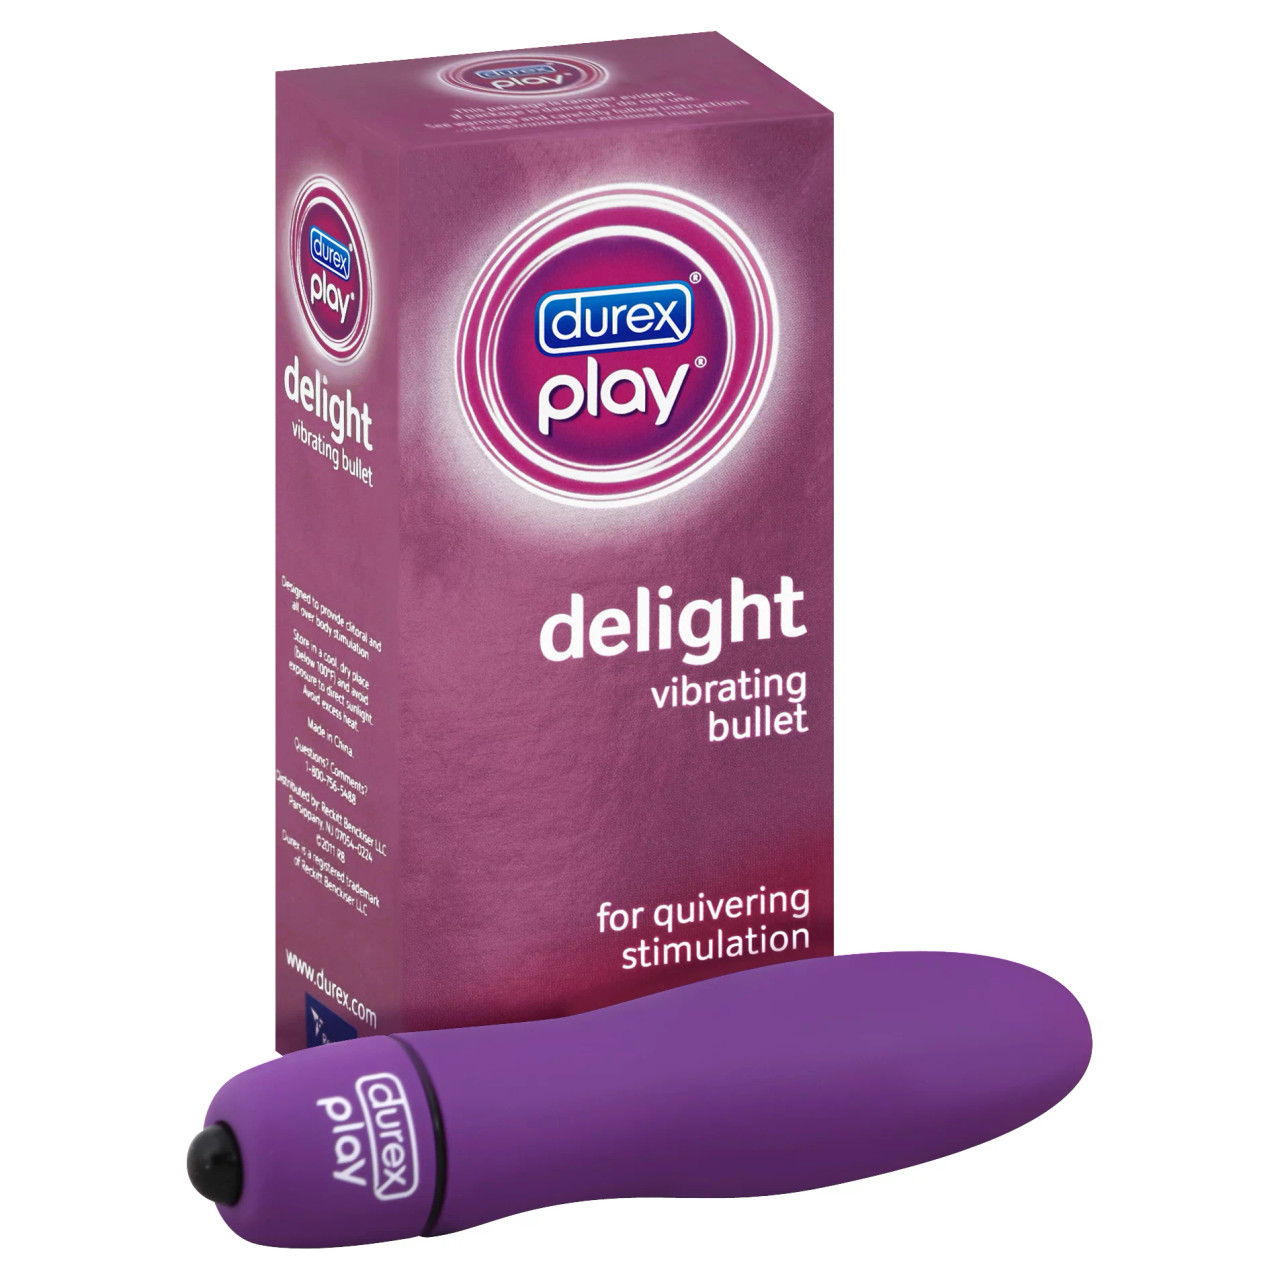 Durex Play Delight Vibrating Bullet | Buy vibrating bullets online from CondomDepot